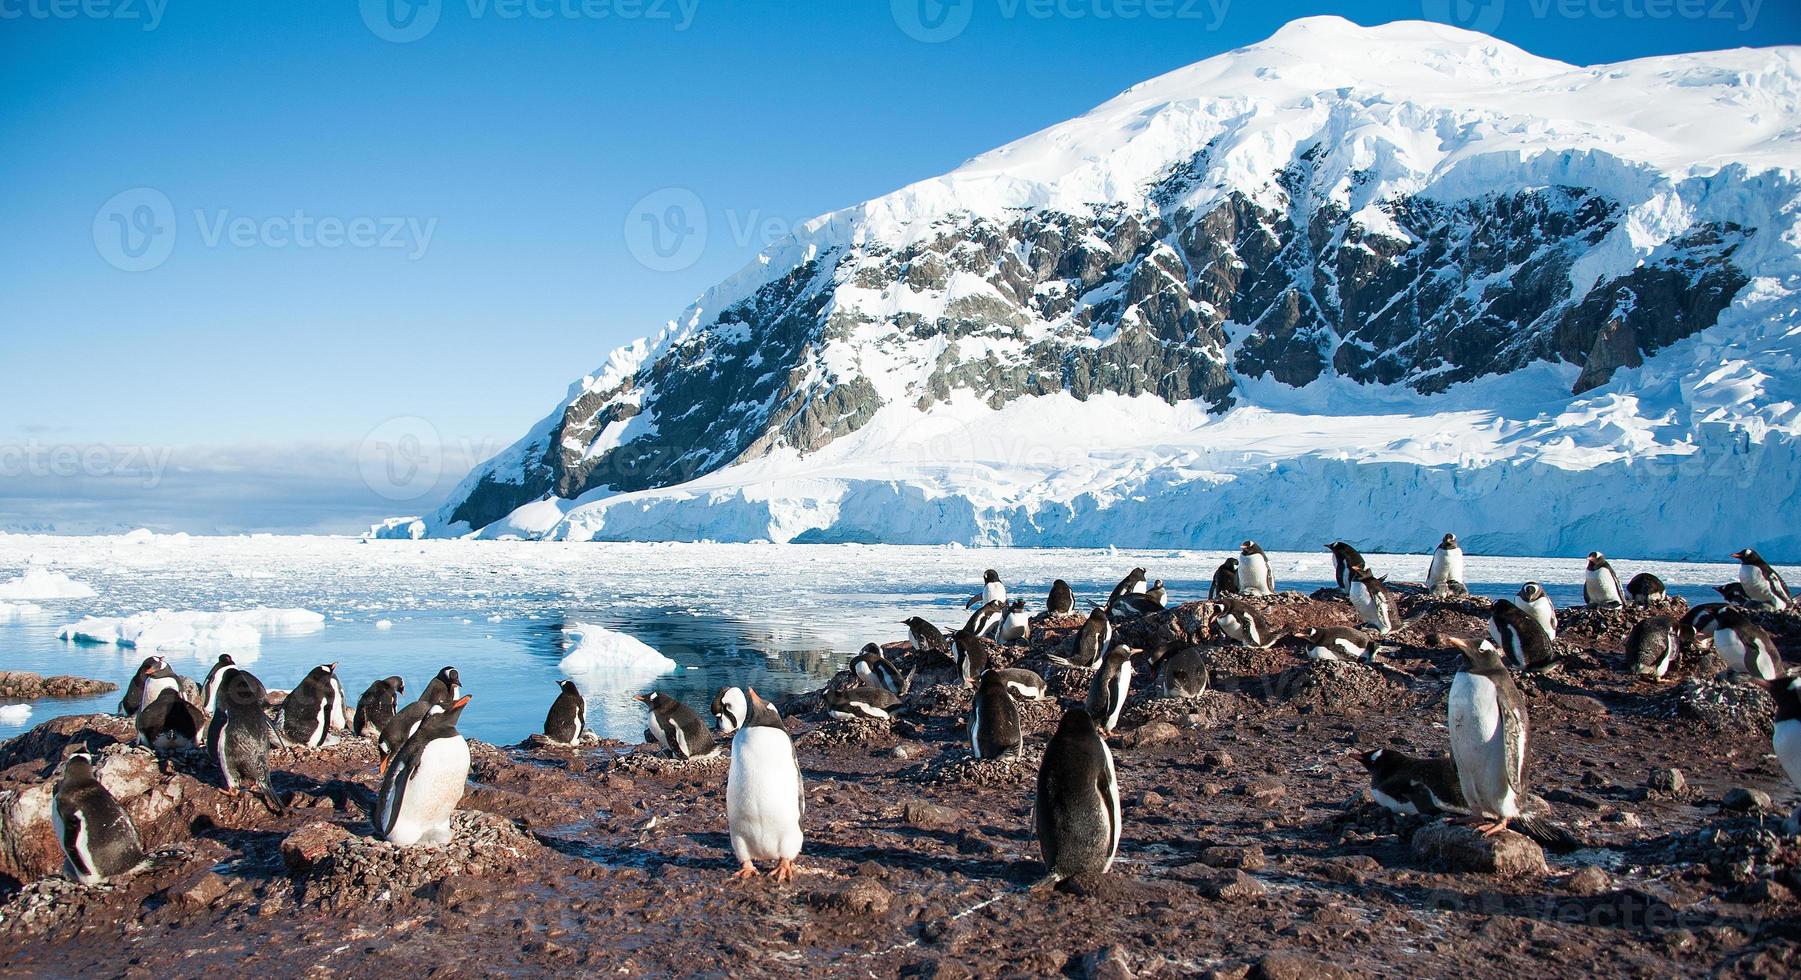 Gentoo penguins near the mountain photo